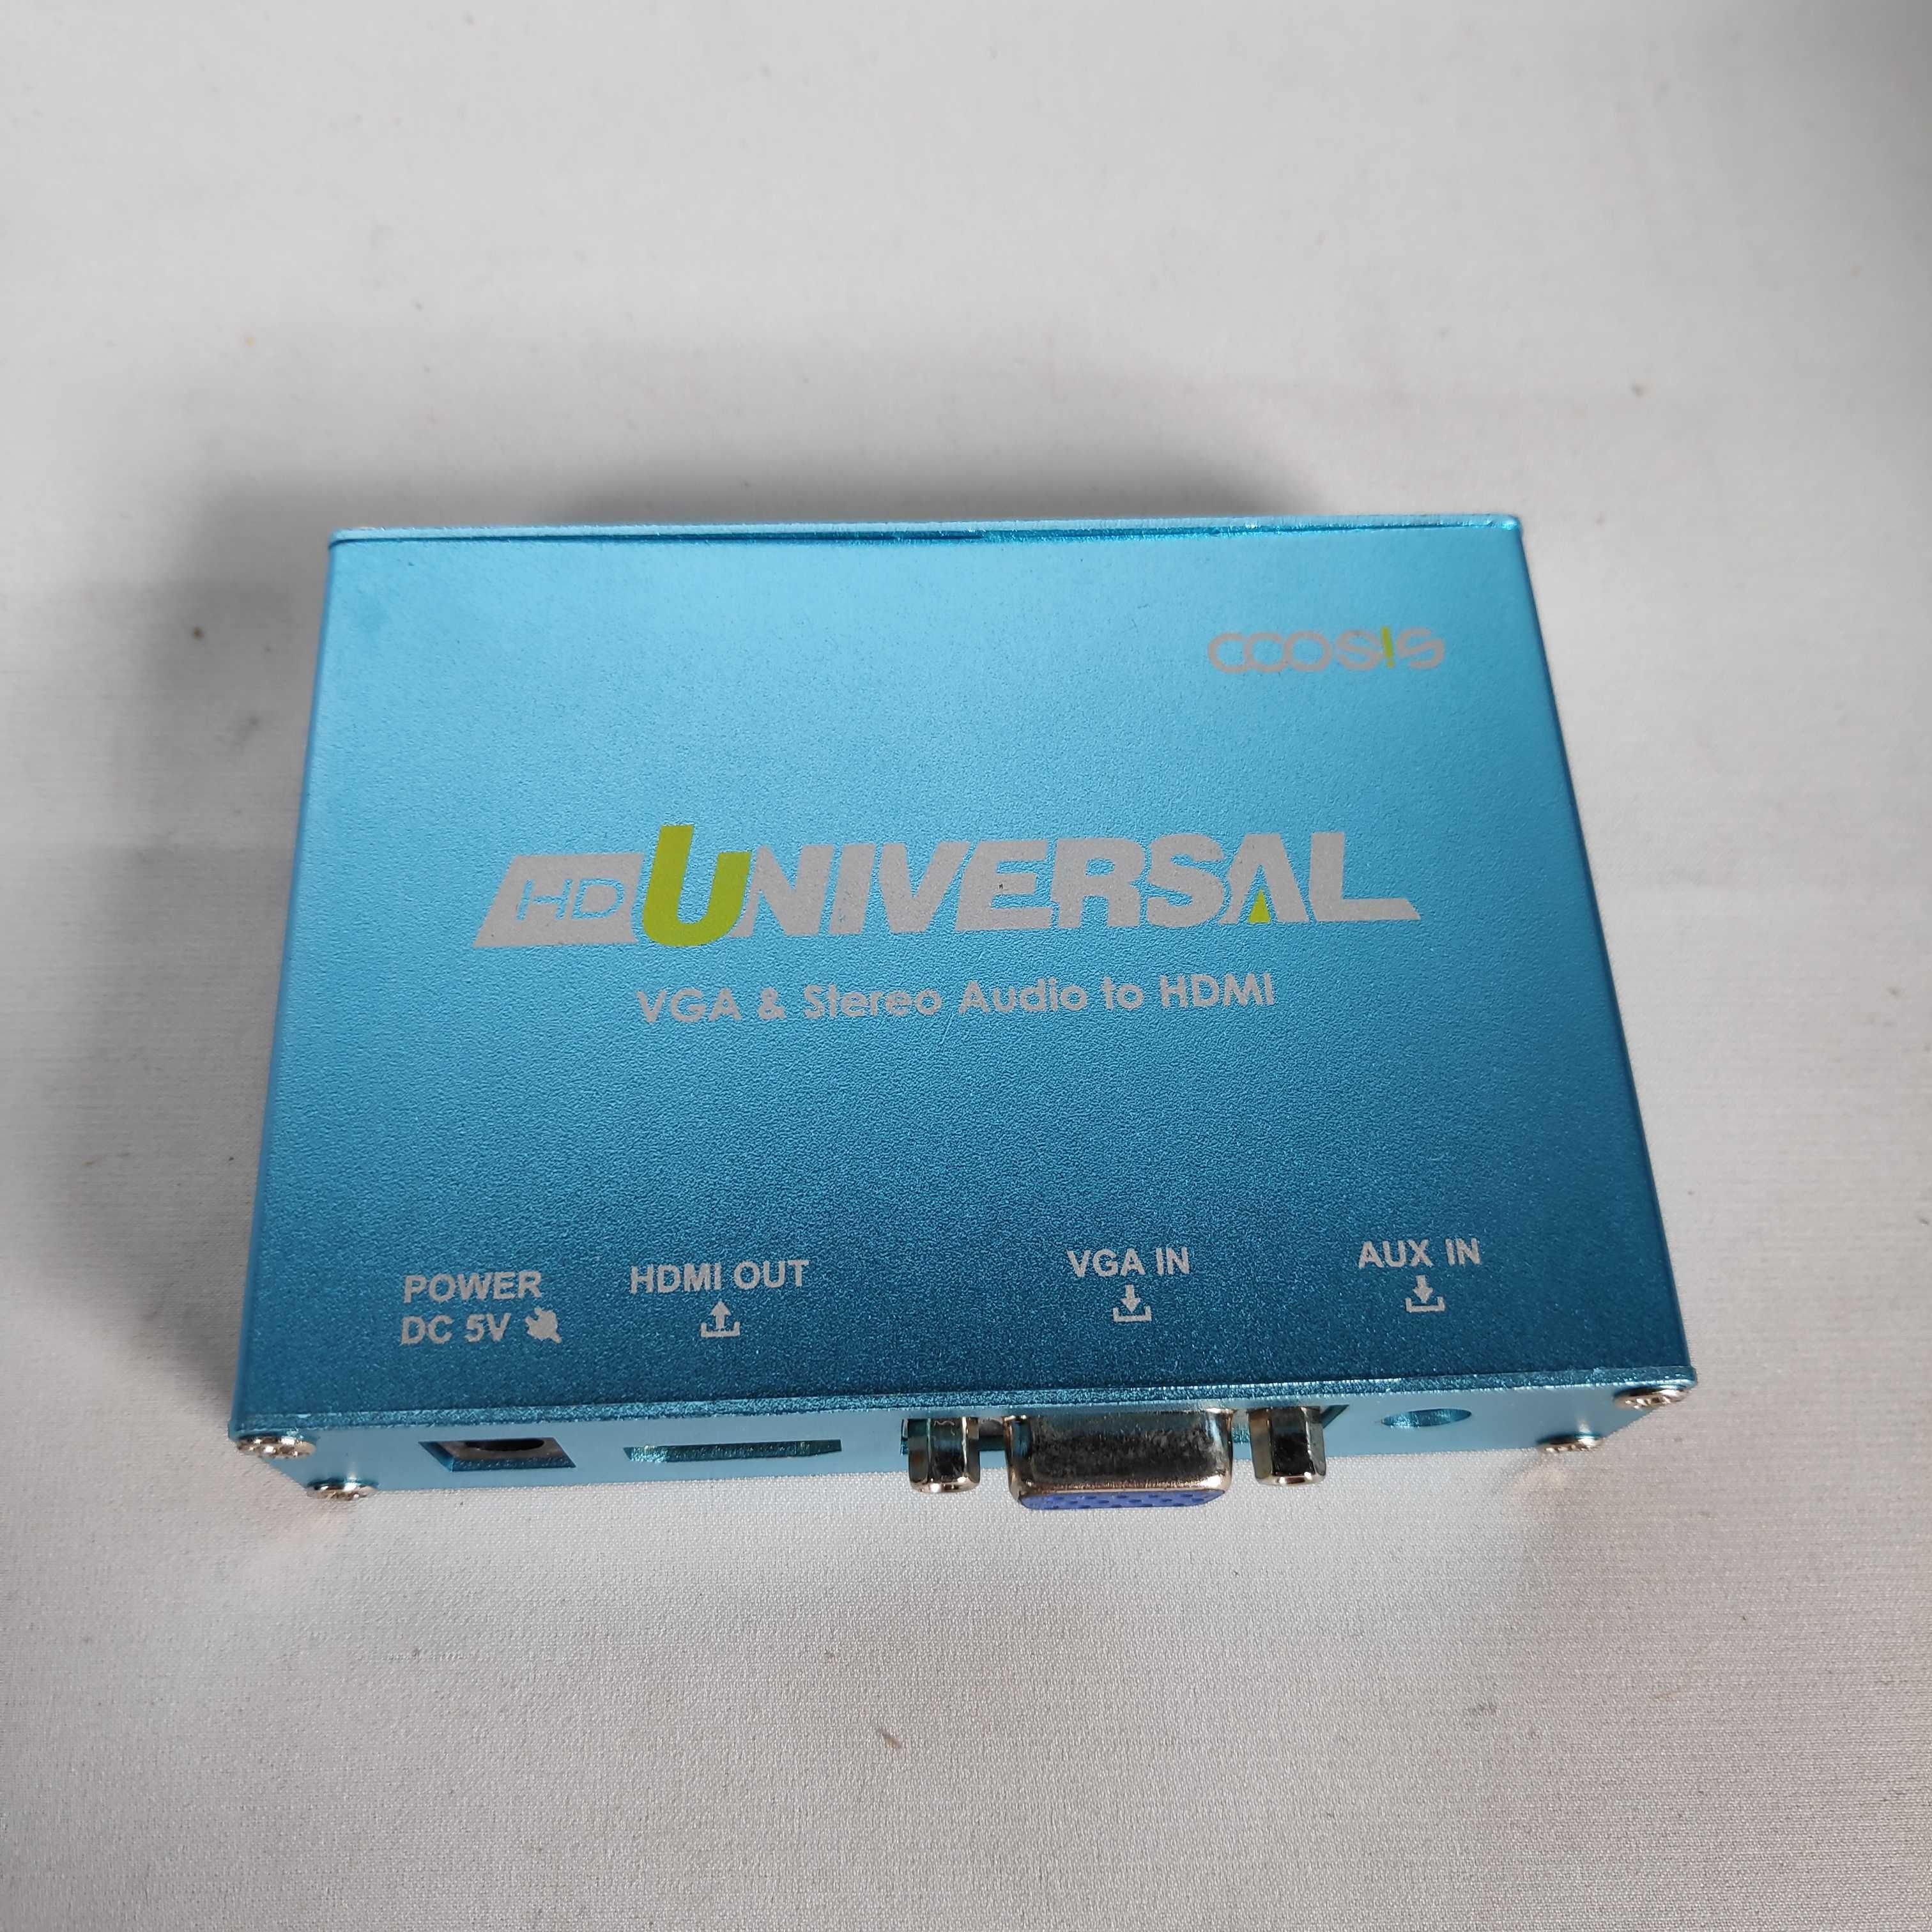 Conversor HD Universal VGA & Stereo Audio to HDMI